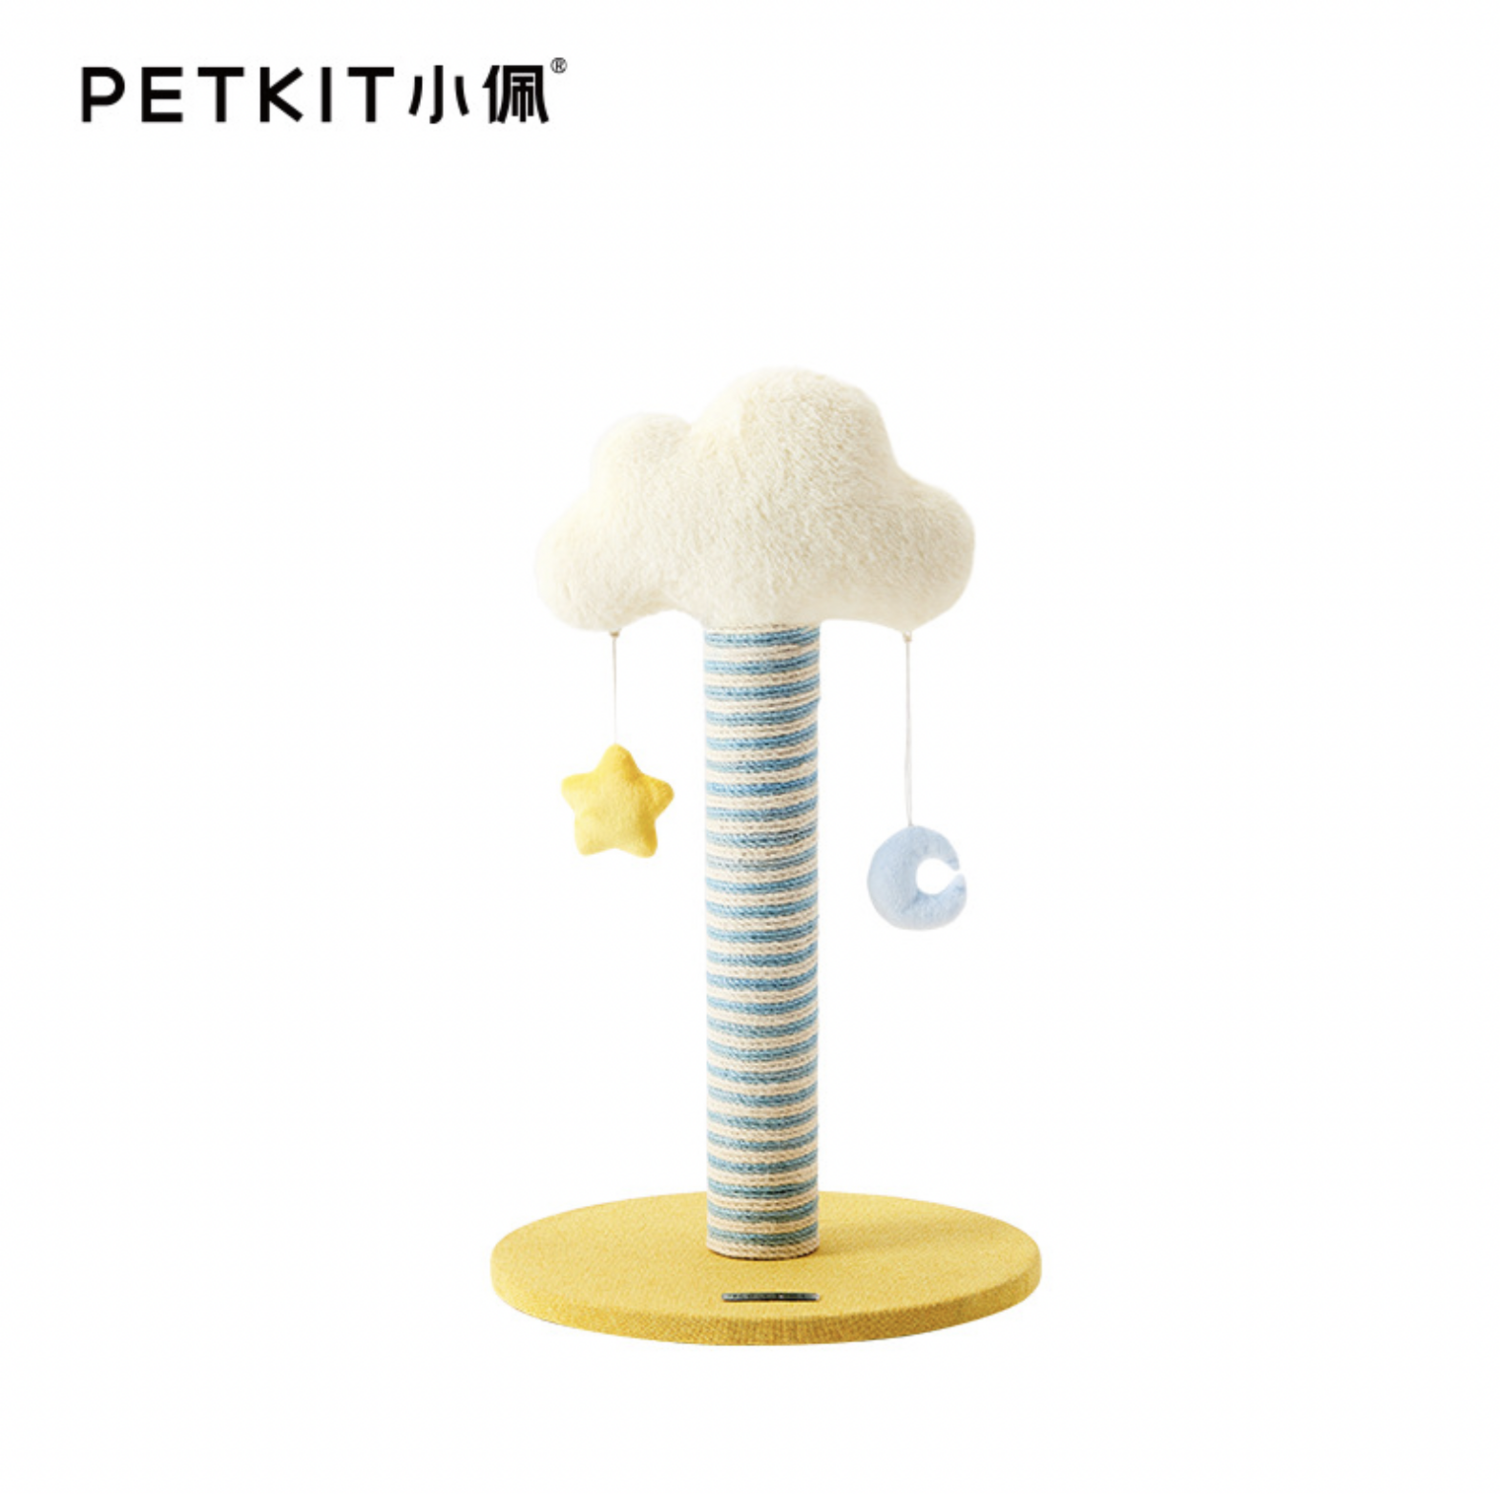 Petkit Cloud Scratcher cat tree - 小佩云朵猫抓板猫树